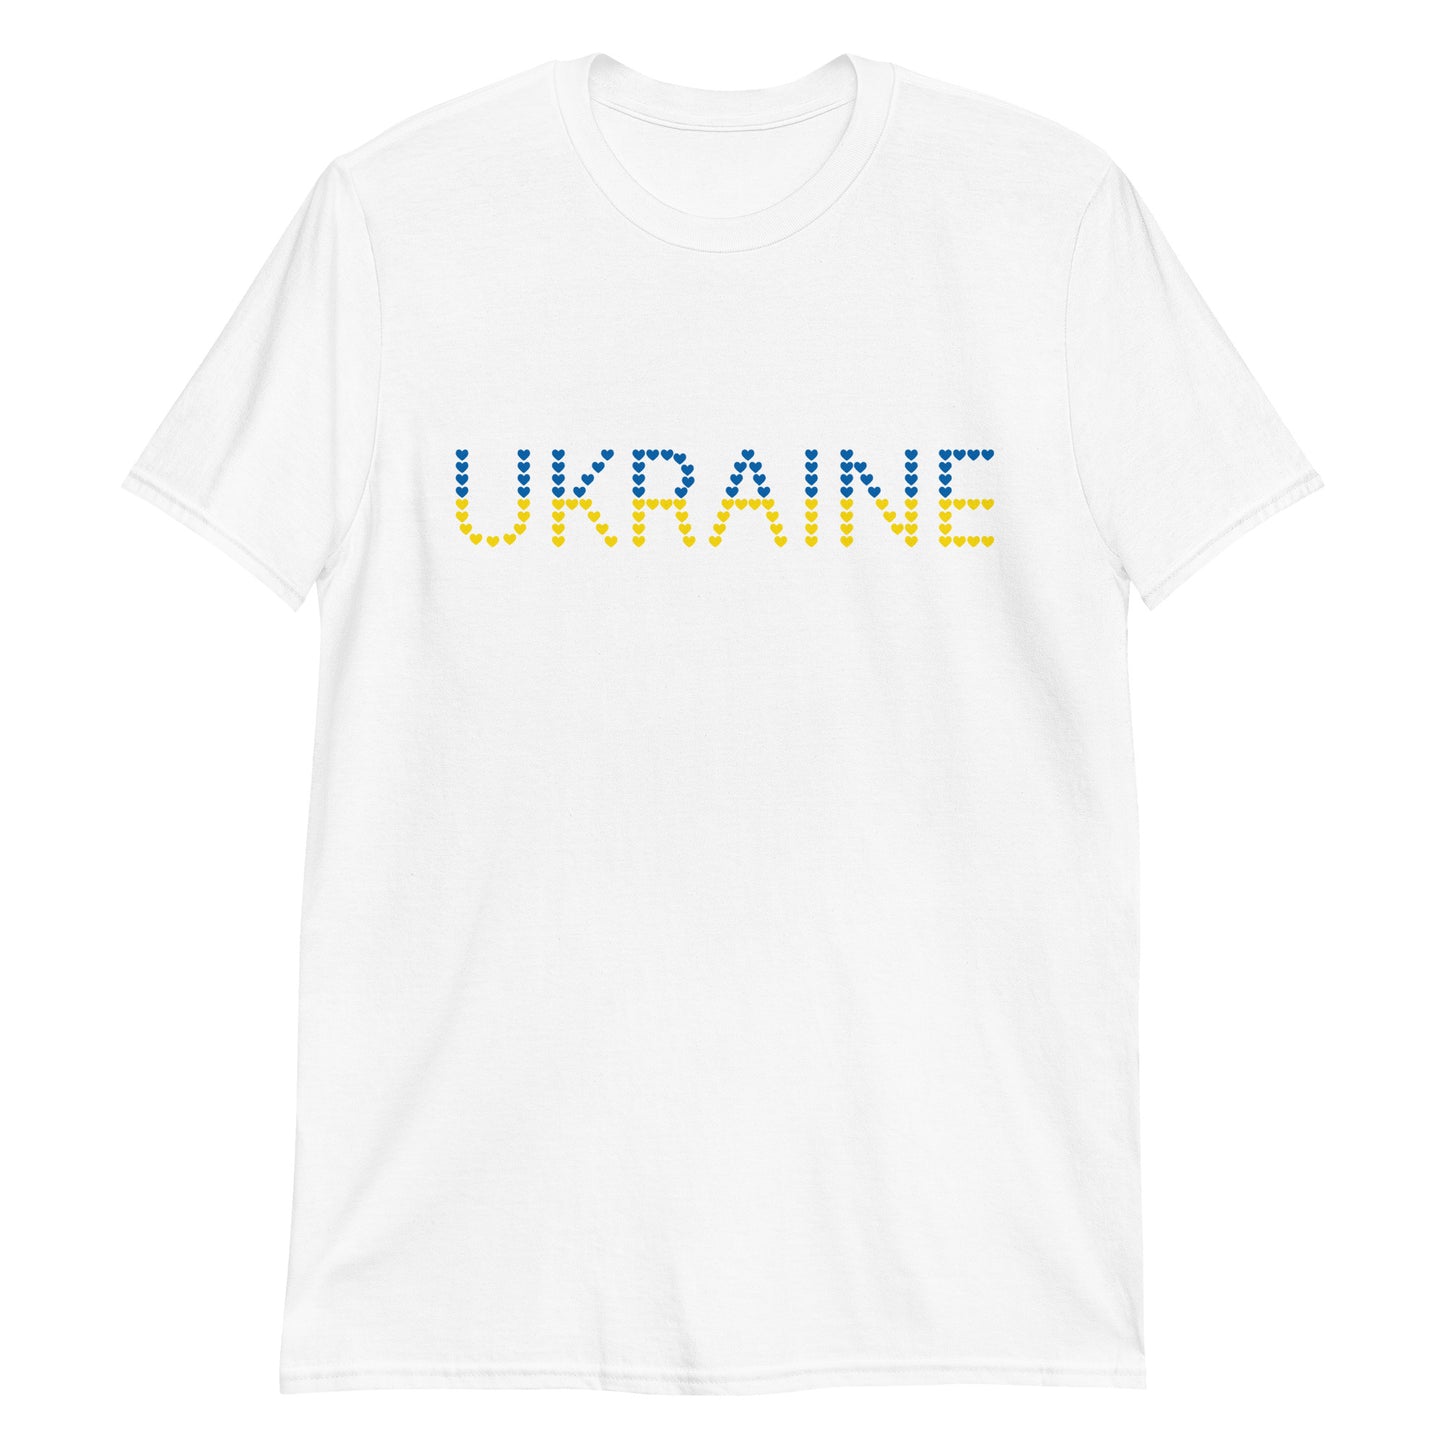 Sending Love to Ukraine T-Shirt